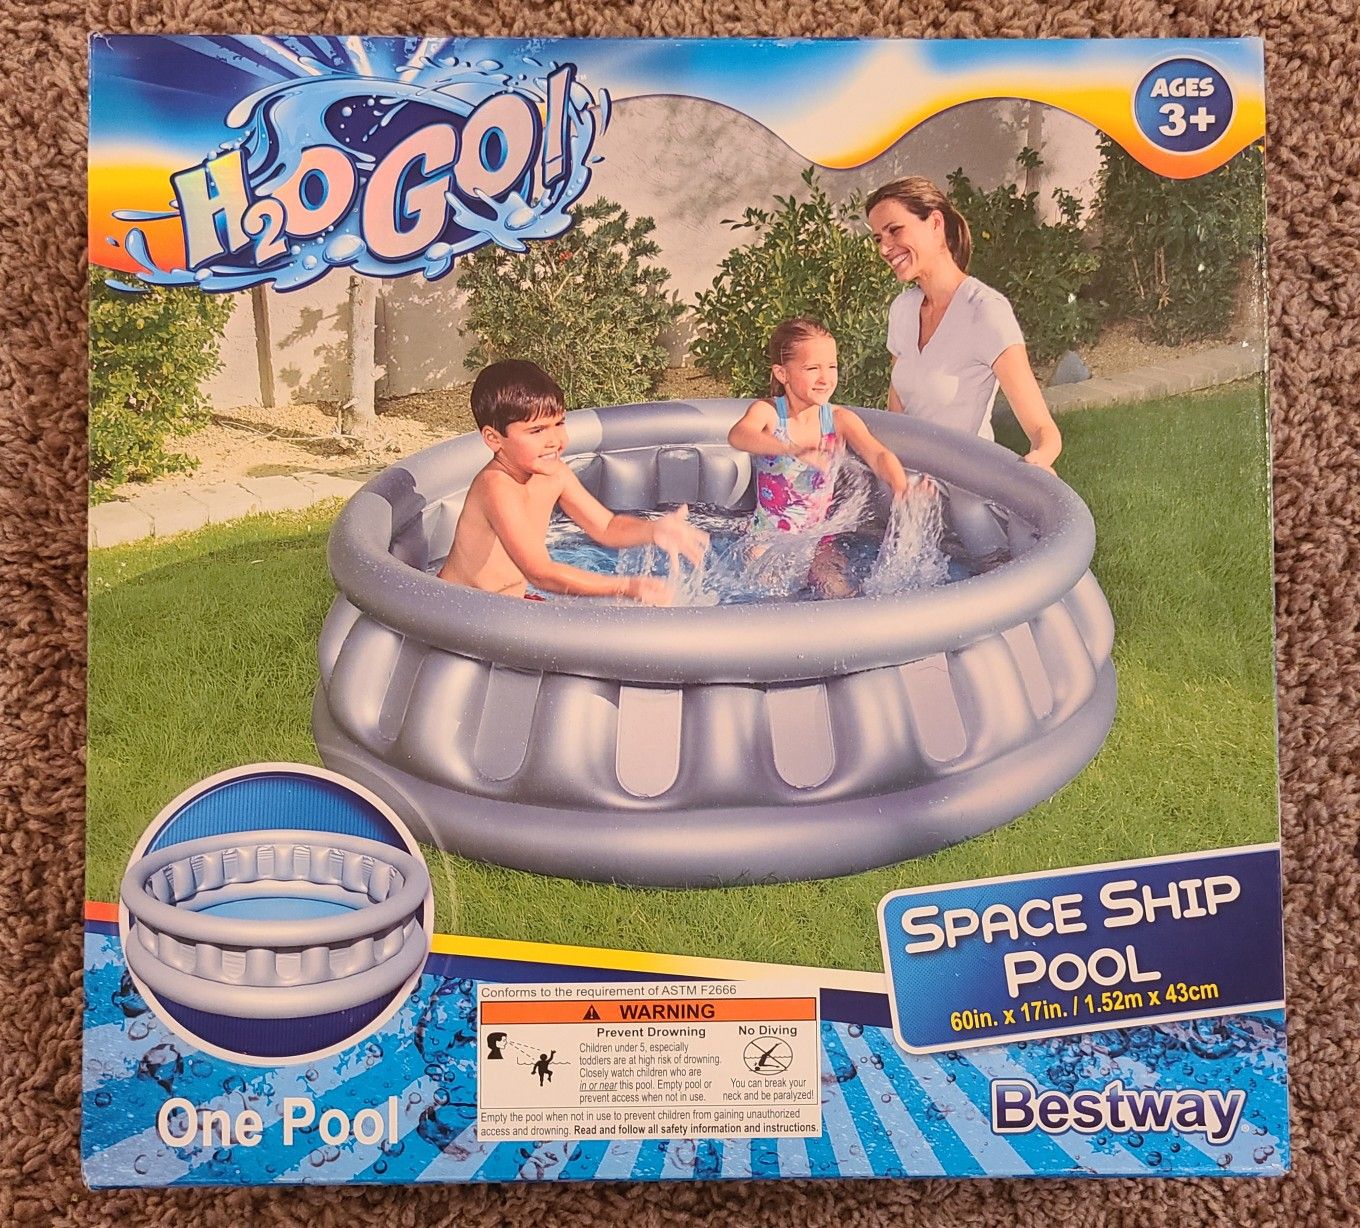 Bestway H2OGO Inflatable Space Ship Pool